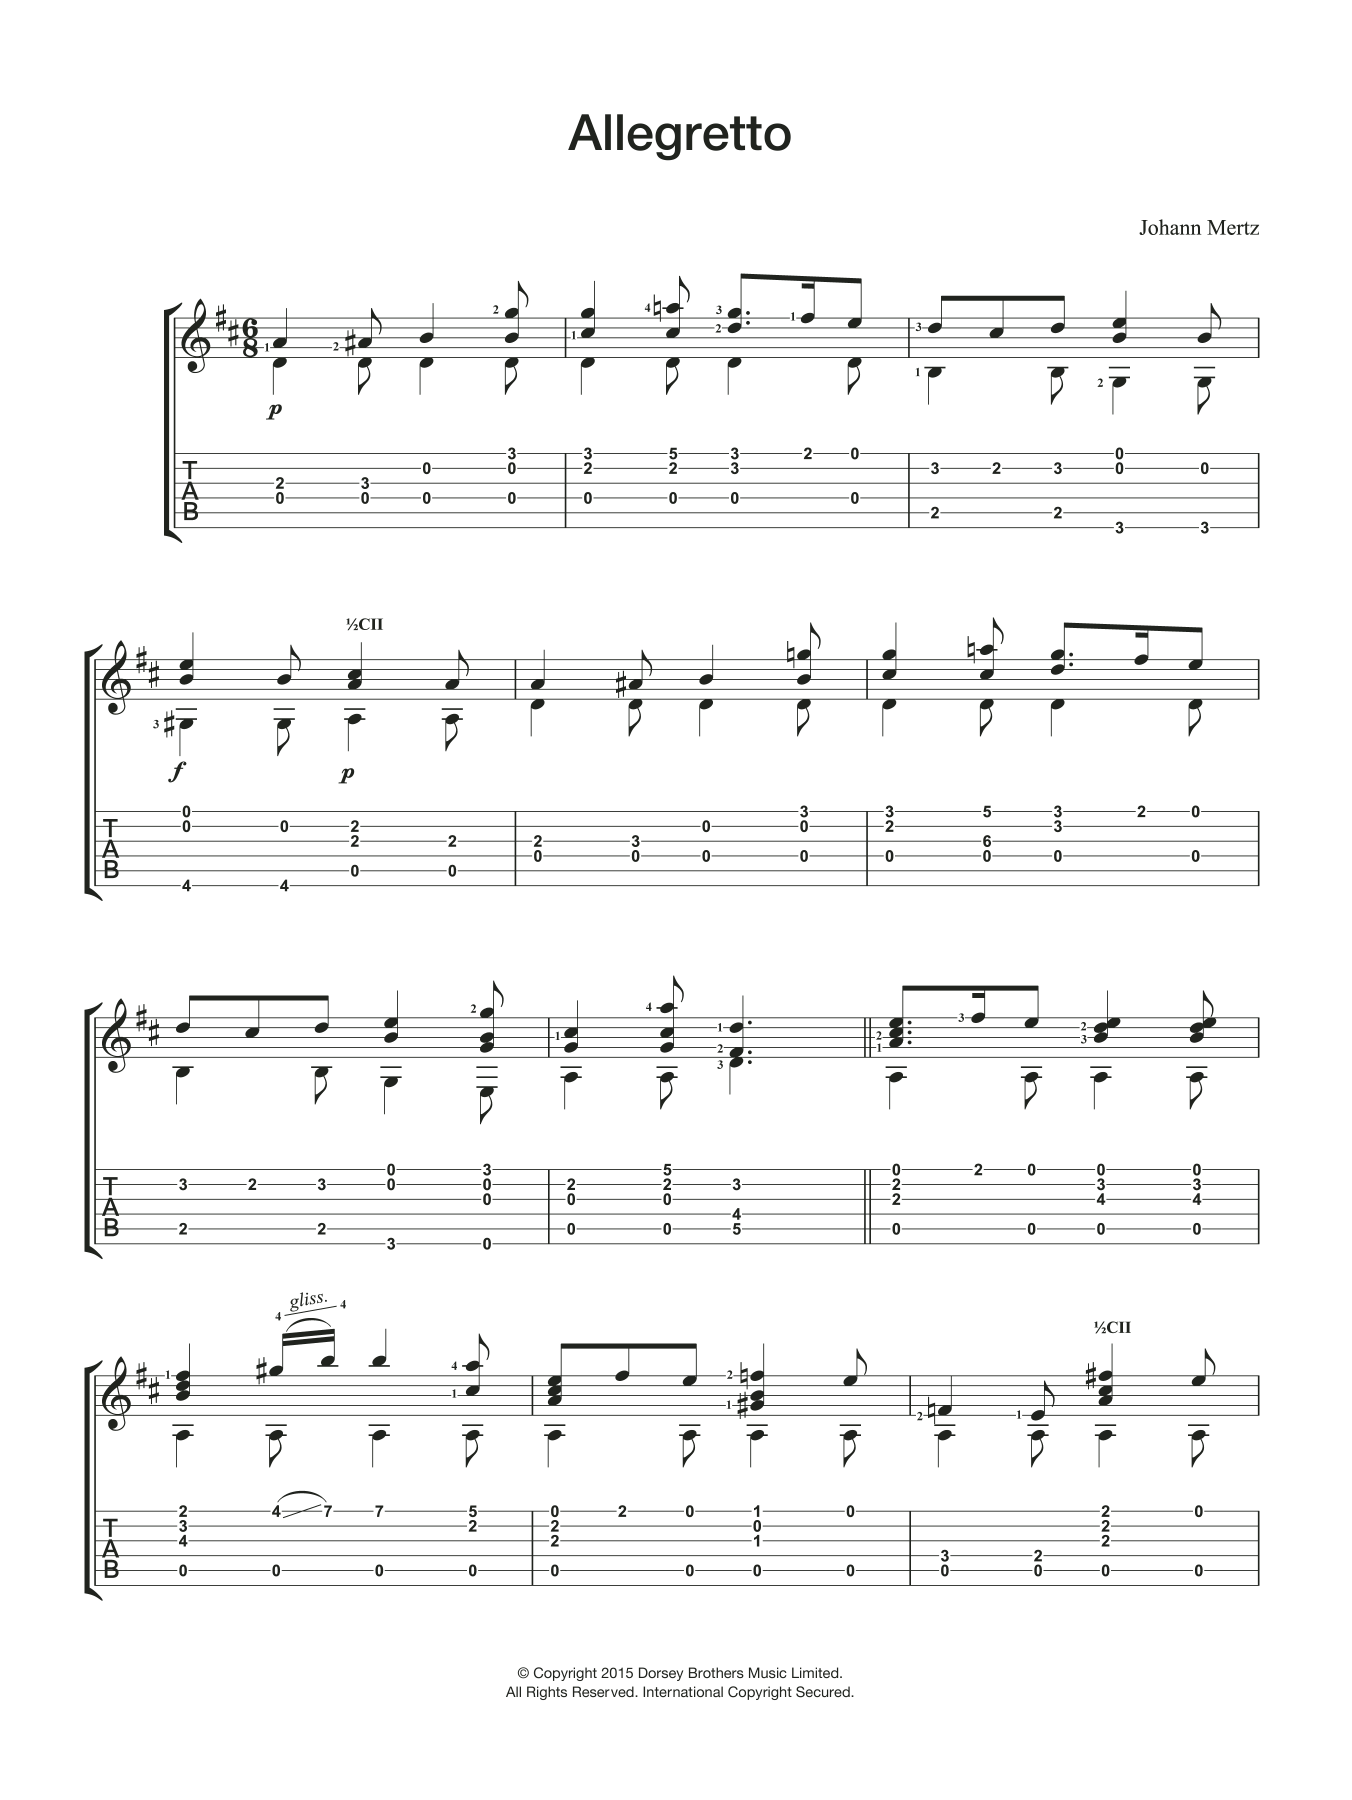 Download Johann Kaspar Mertz Allegretto Sheet Music and learn how to play Guitar PDF digital score in minutes